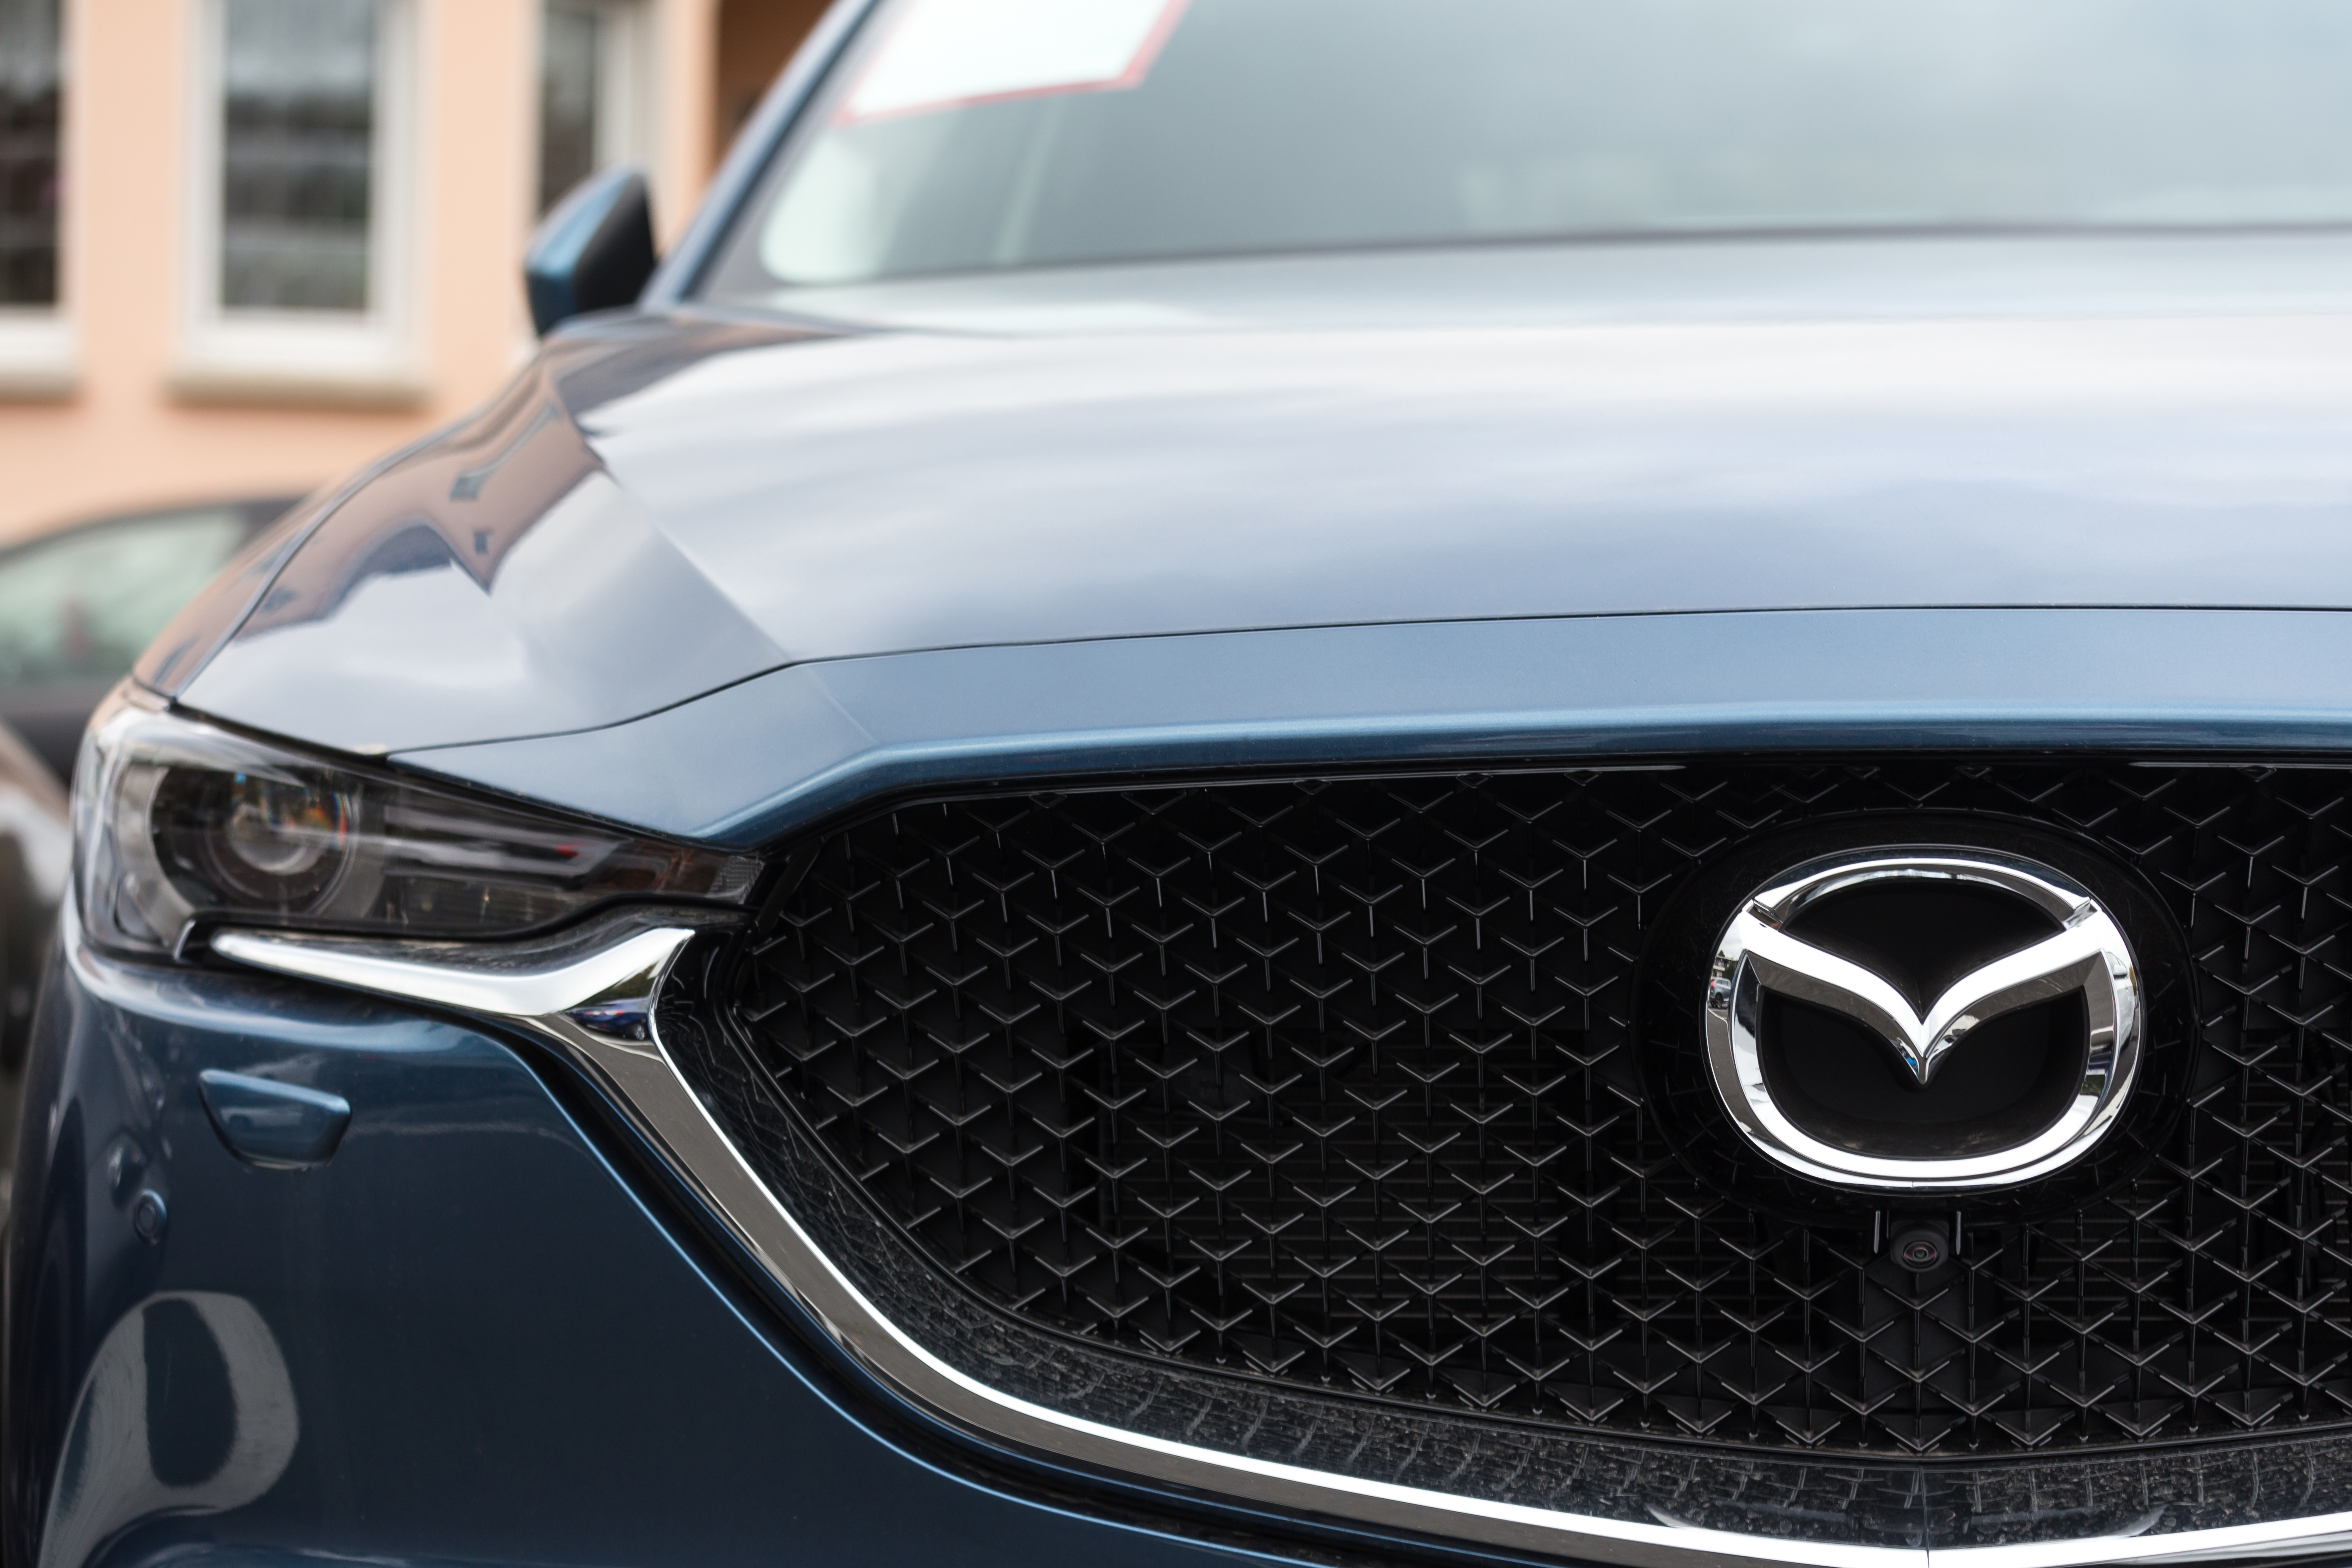 Article image for Mazda recalls 18,000 vehicles over engine stalling concerns